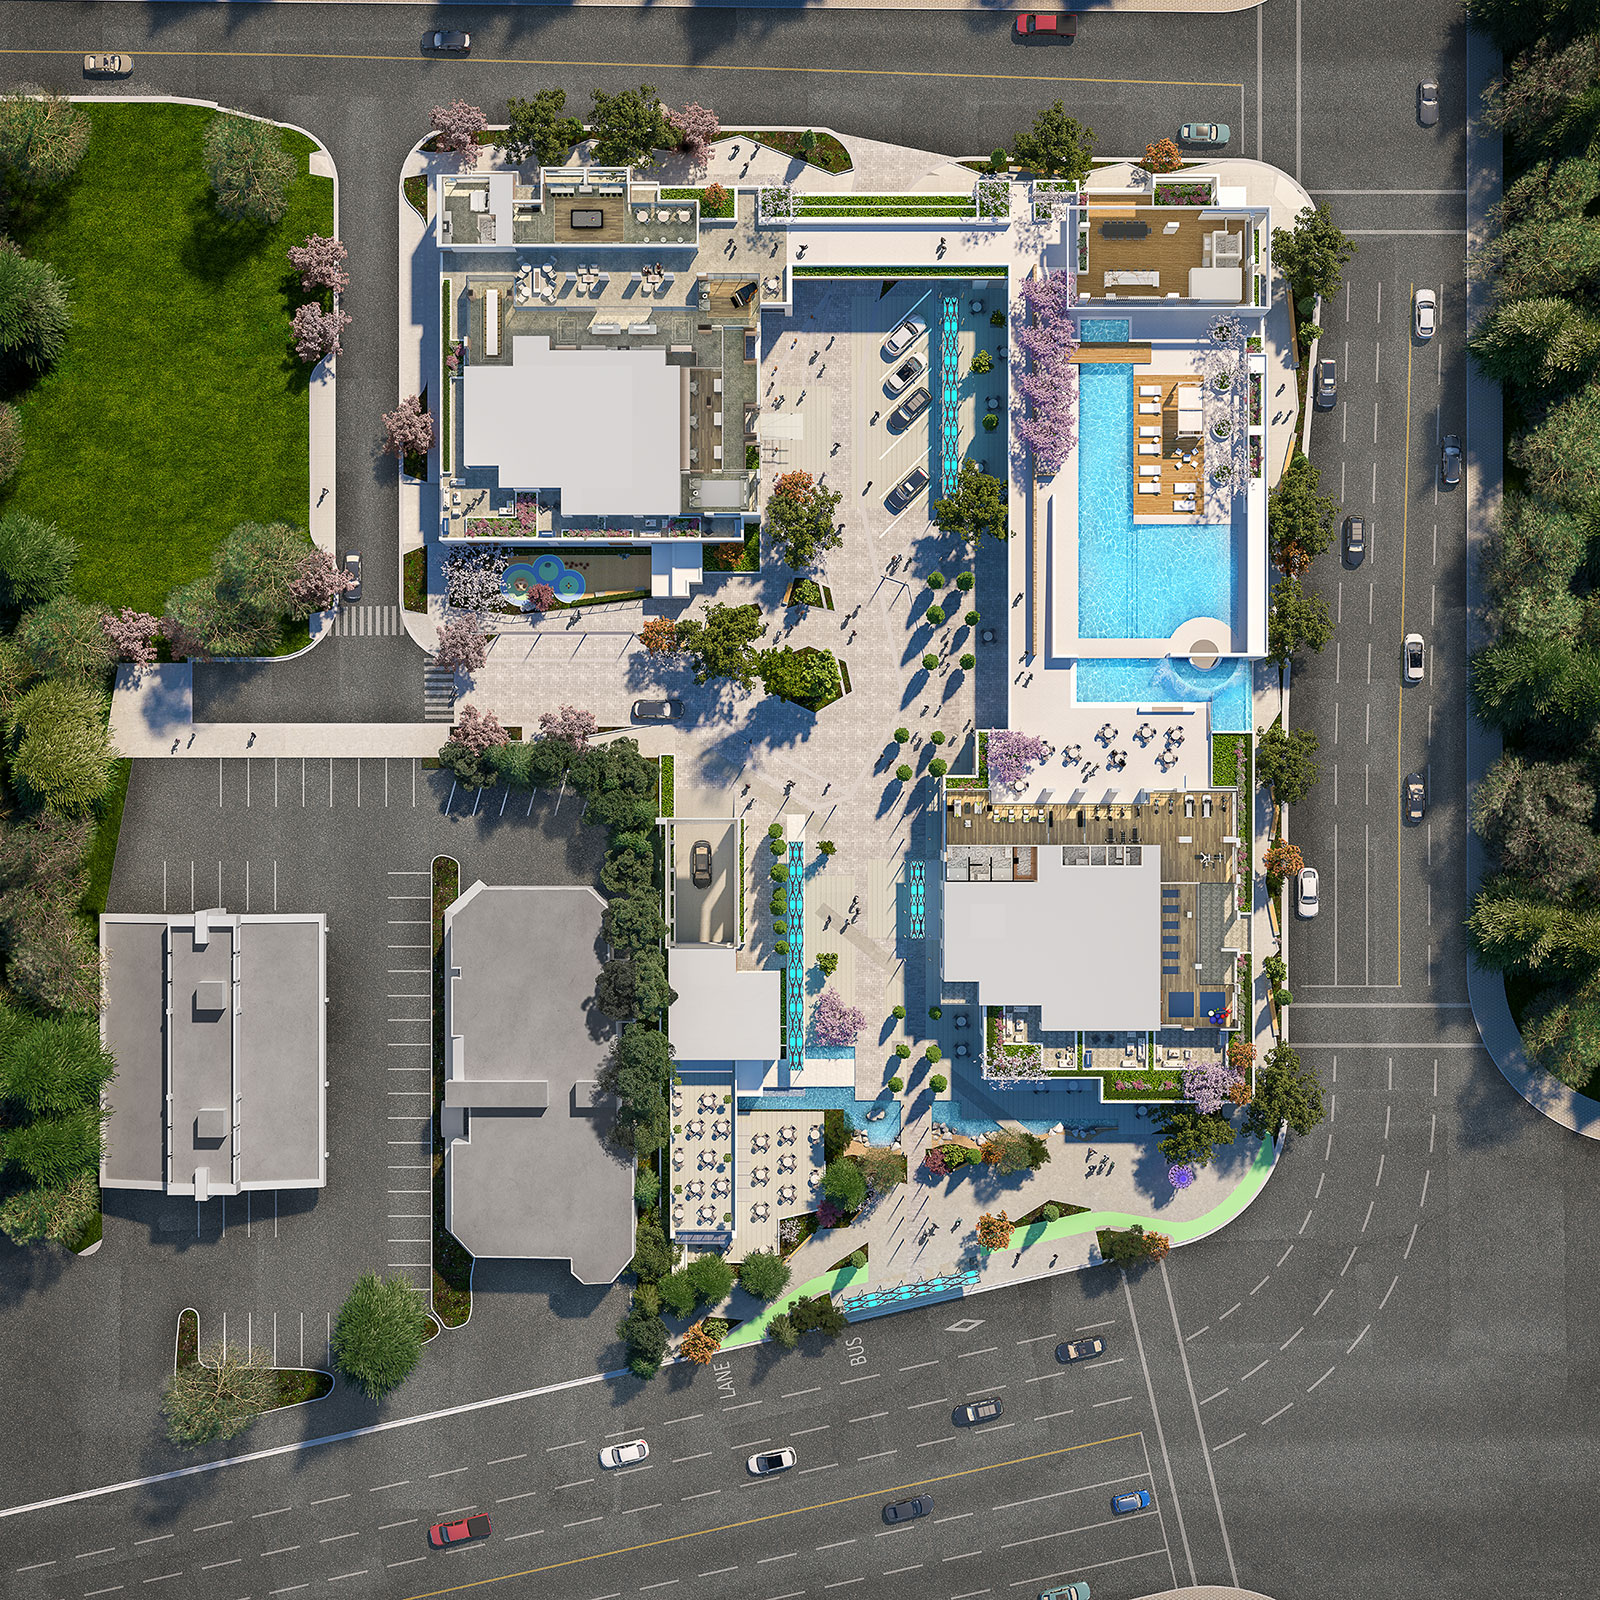 Resort layout